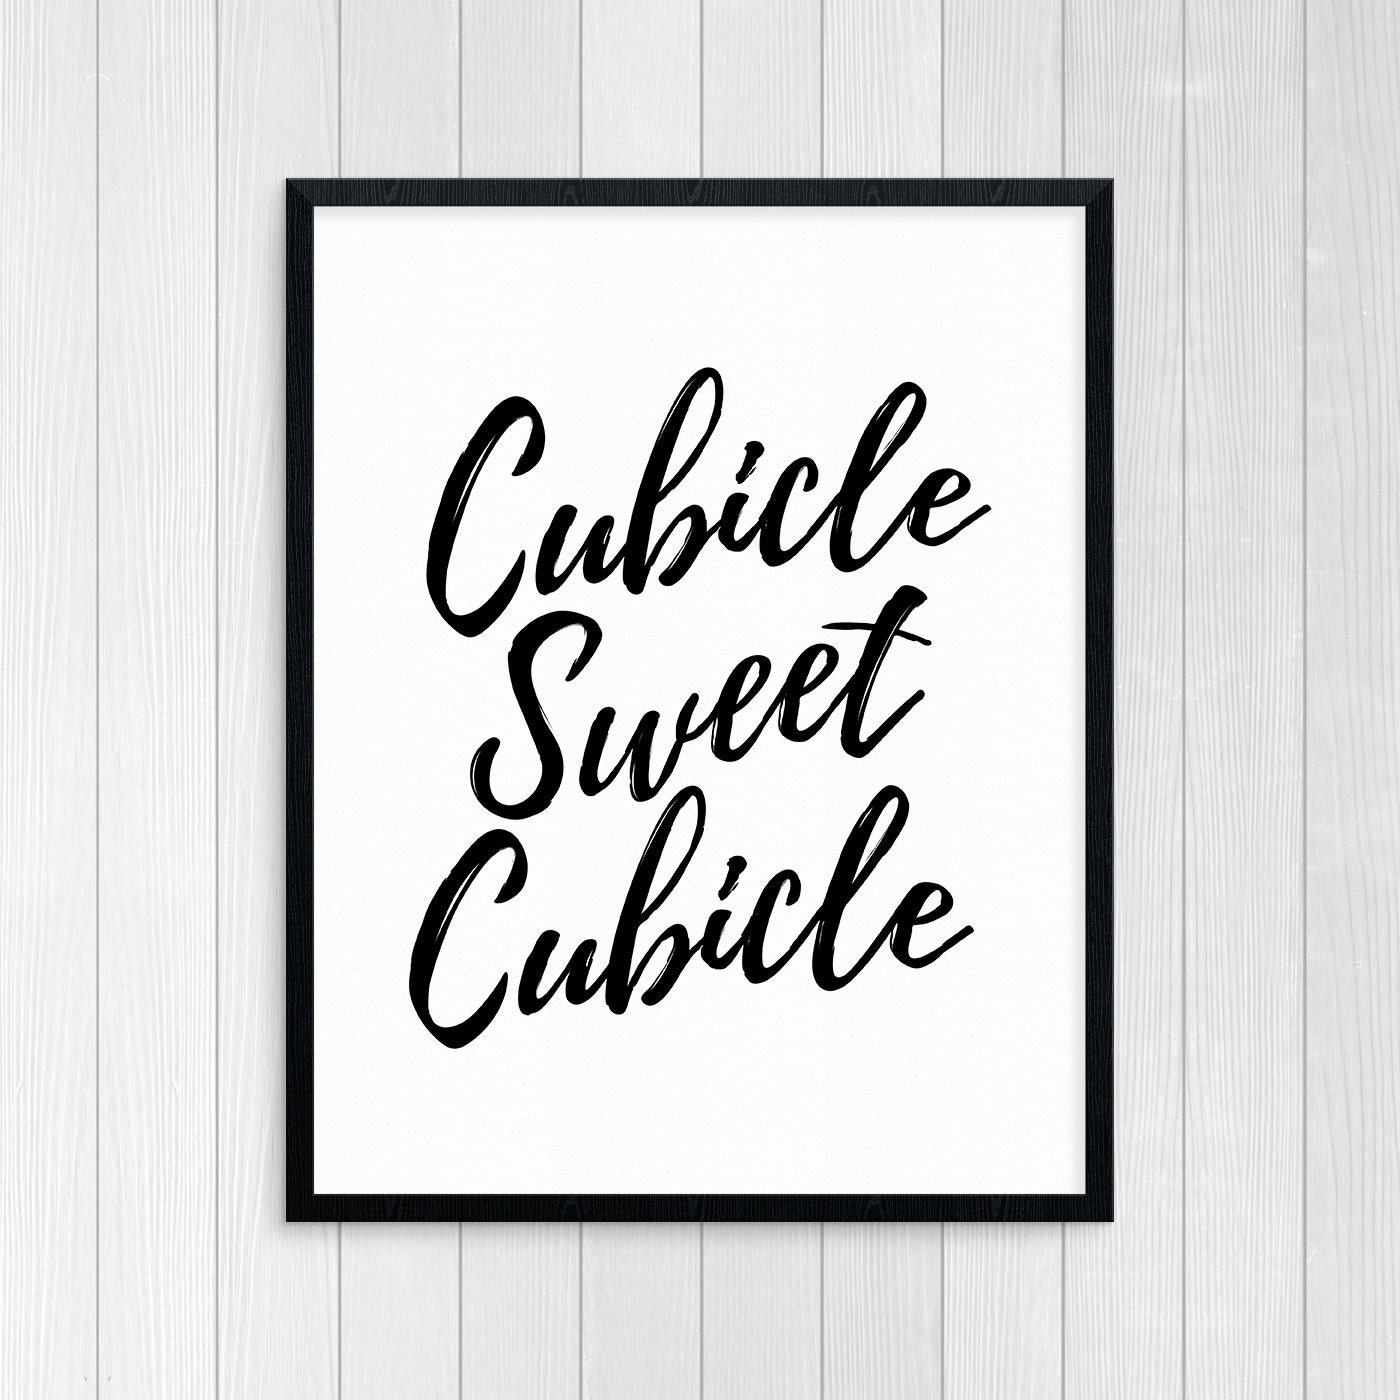 printable-art-cubicle-sweet-cubicle-funny-work-art-black